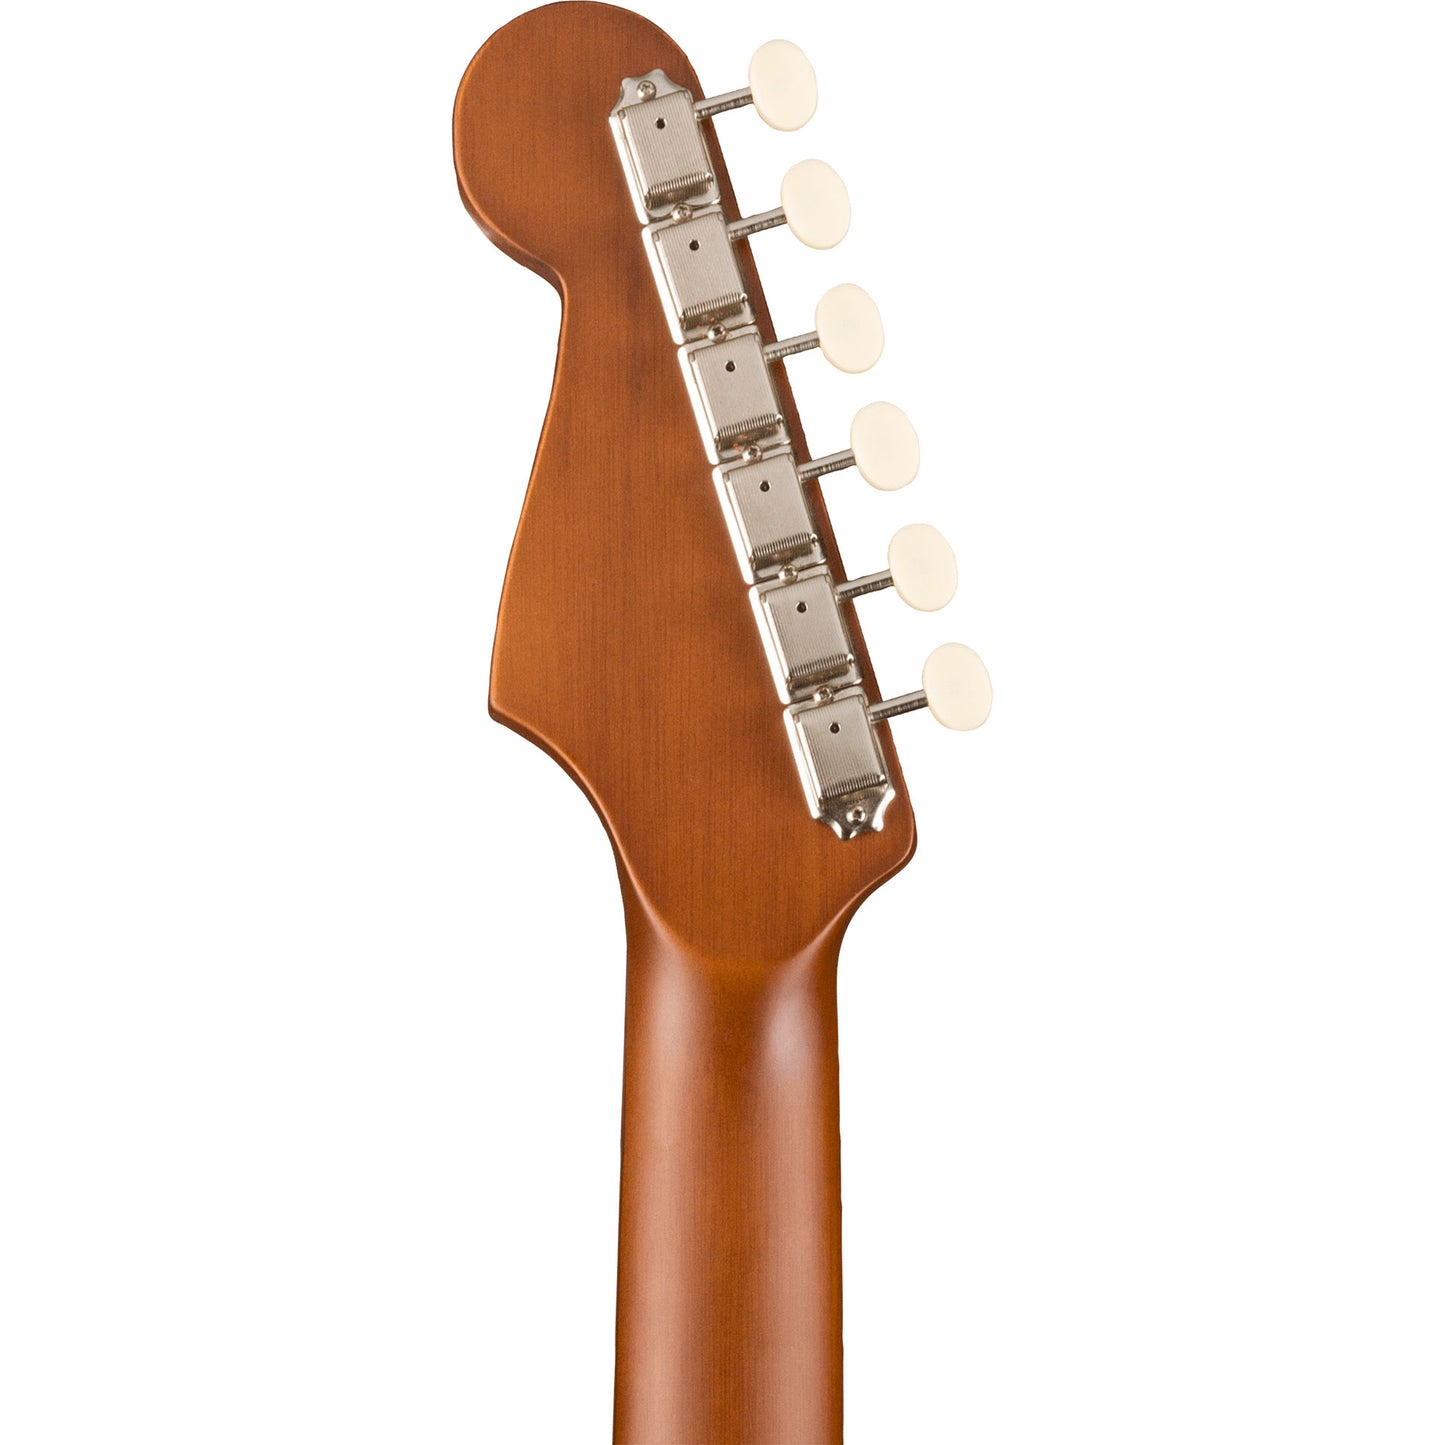 Fender Redondo Mini Acoustic Guitar, Sunburst